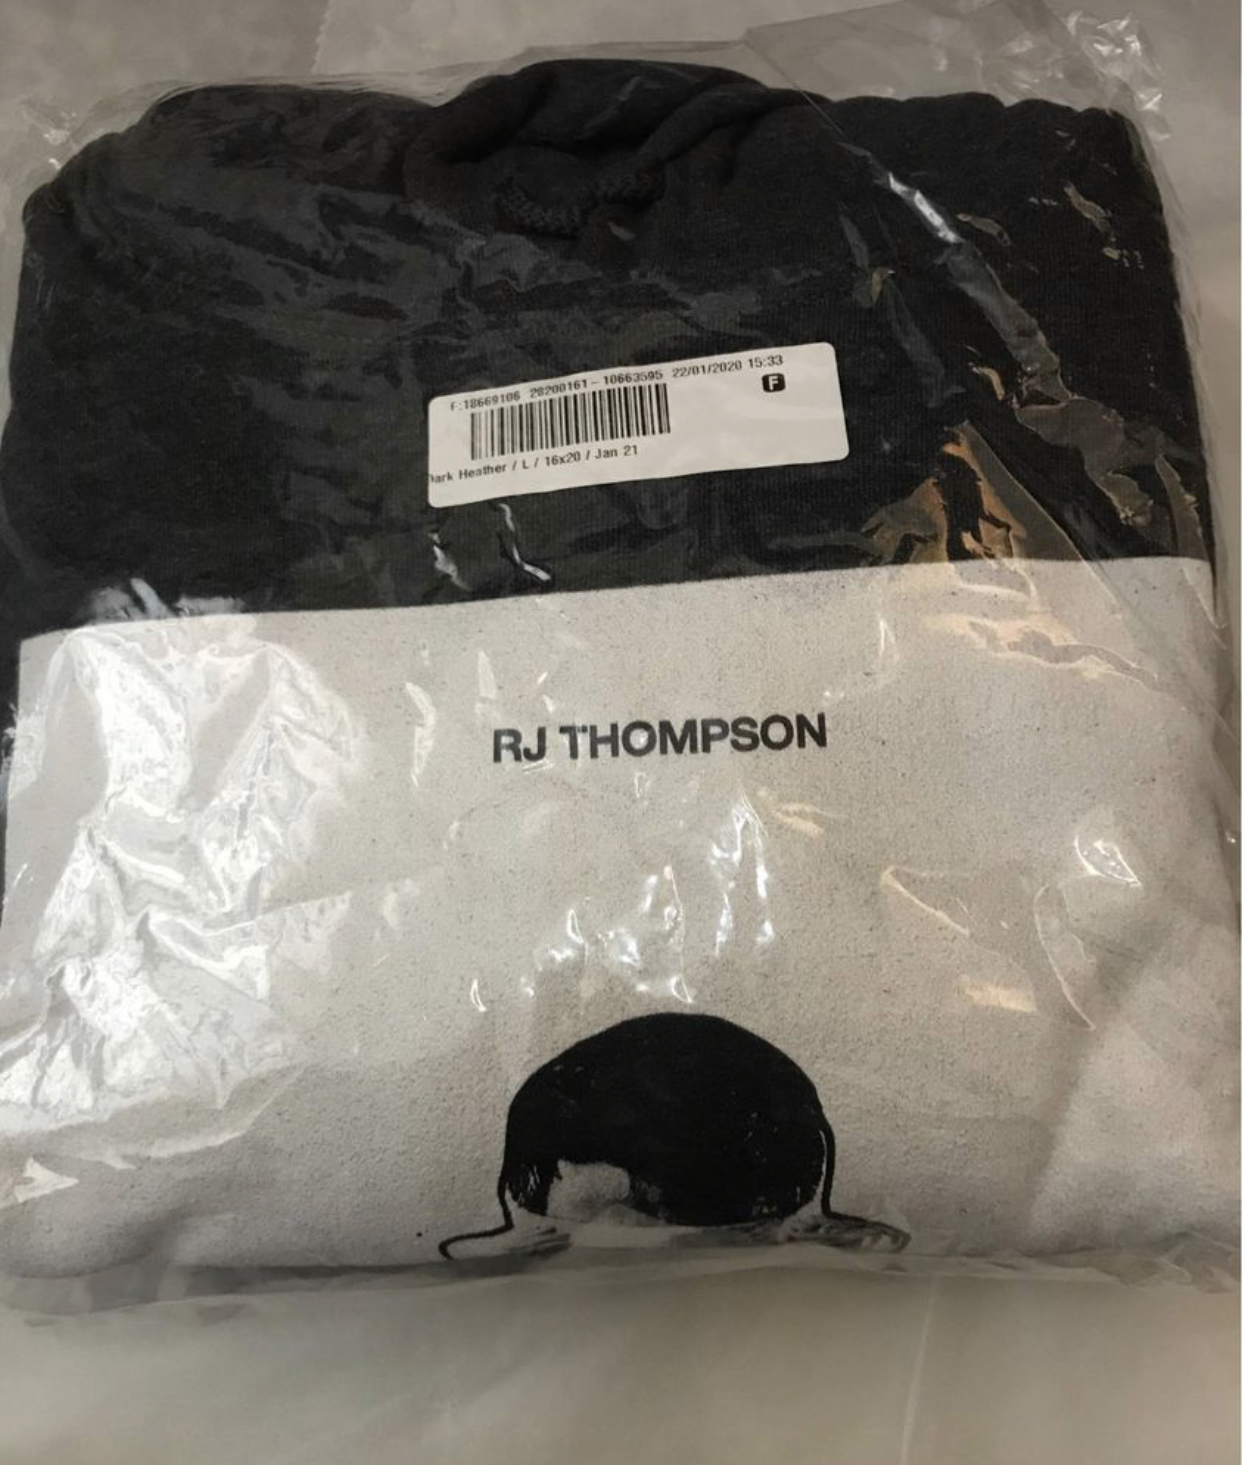 RJ Thompson hoodie